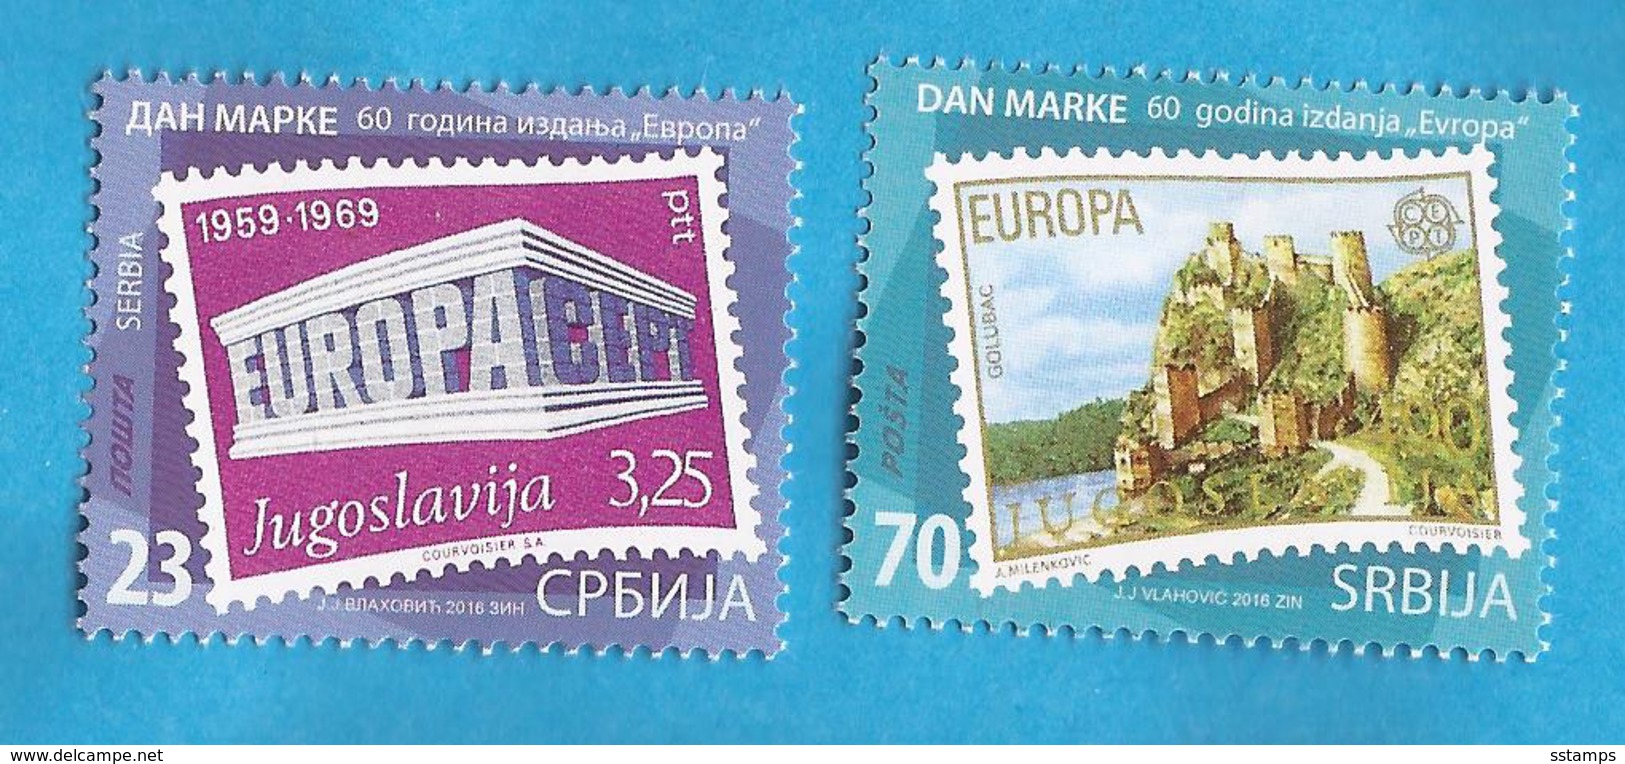 2016  SRBIJA  SERBIA  EUROPA  Stamp Day - 60 Years Of Publication EUROPE  MNH - 2016